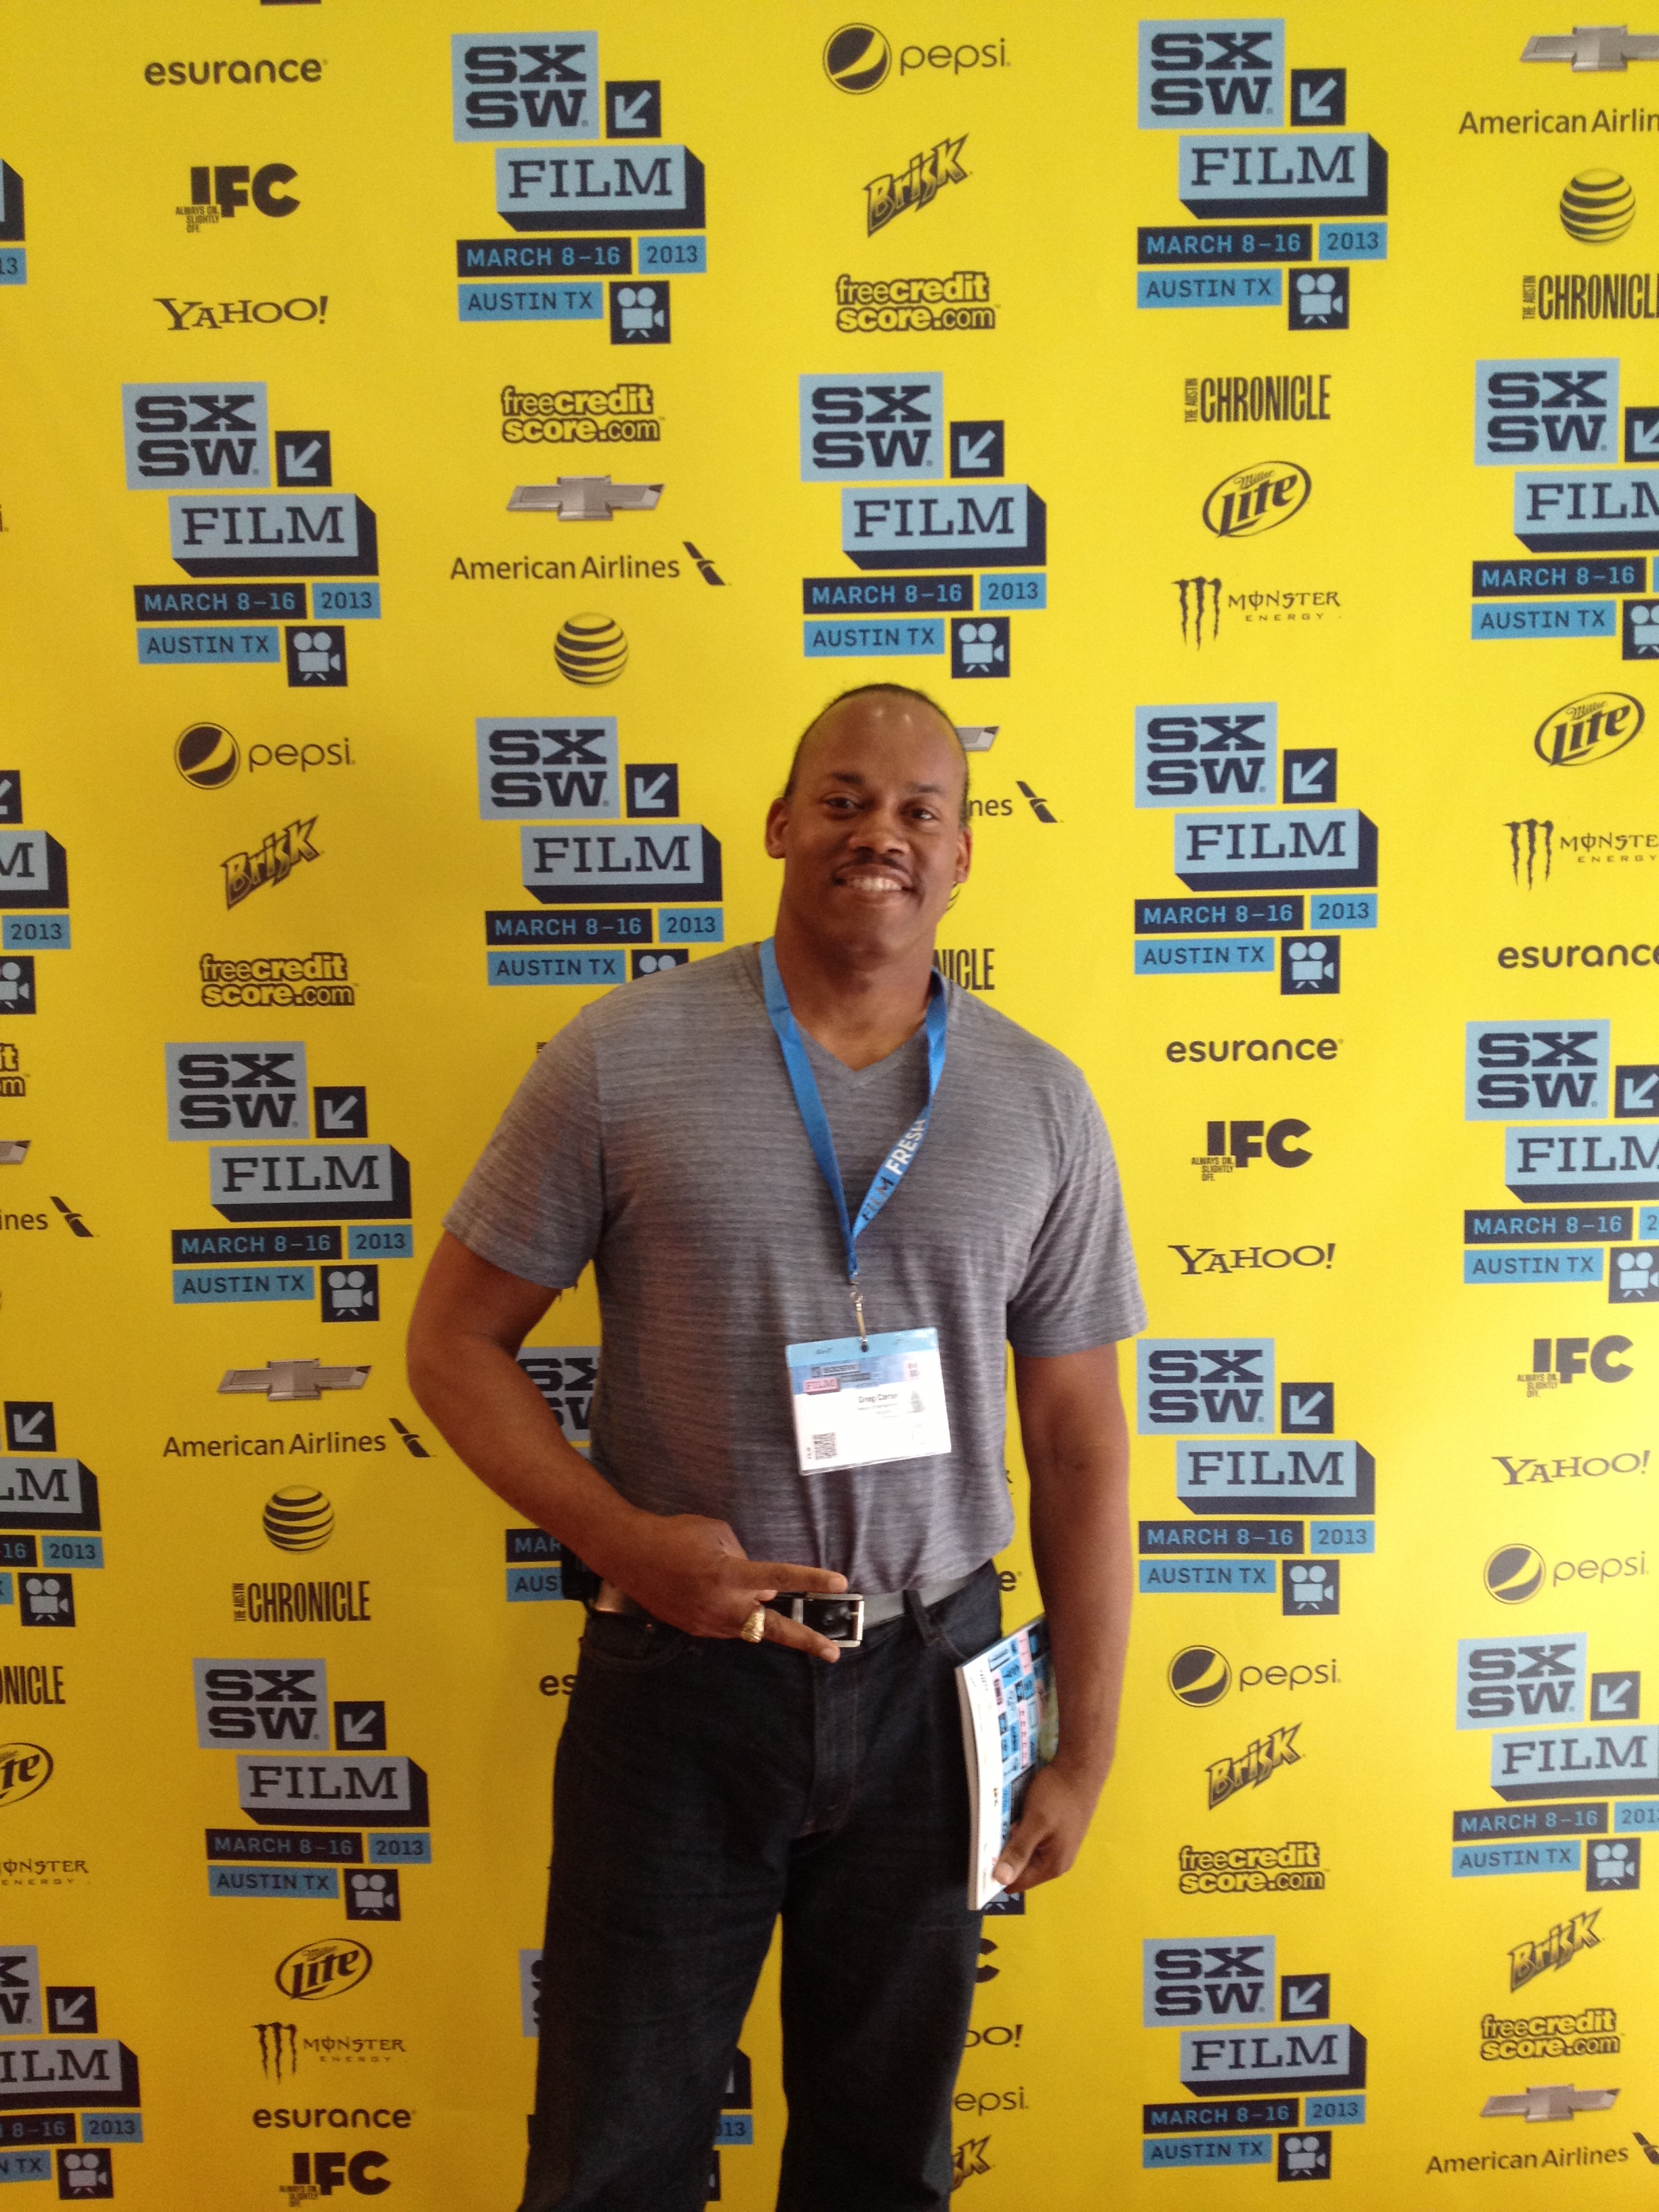 Panelist/Filmmaker Greg Carter the 2013 SXSW Film Festival and Conference